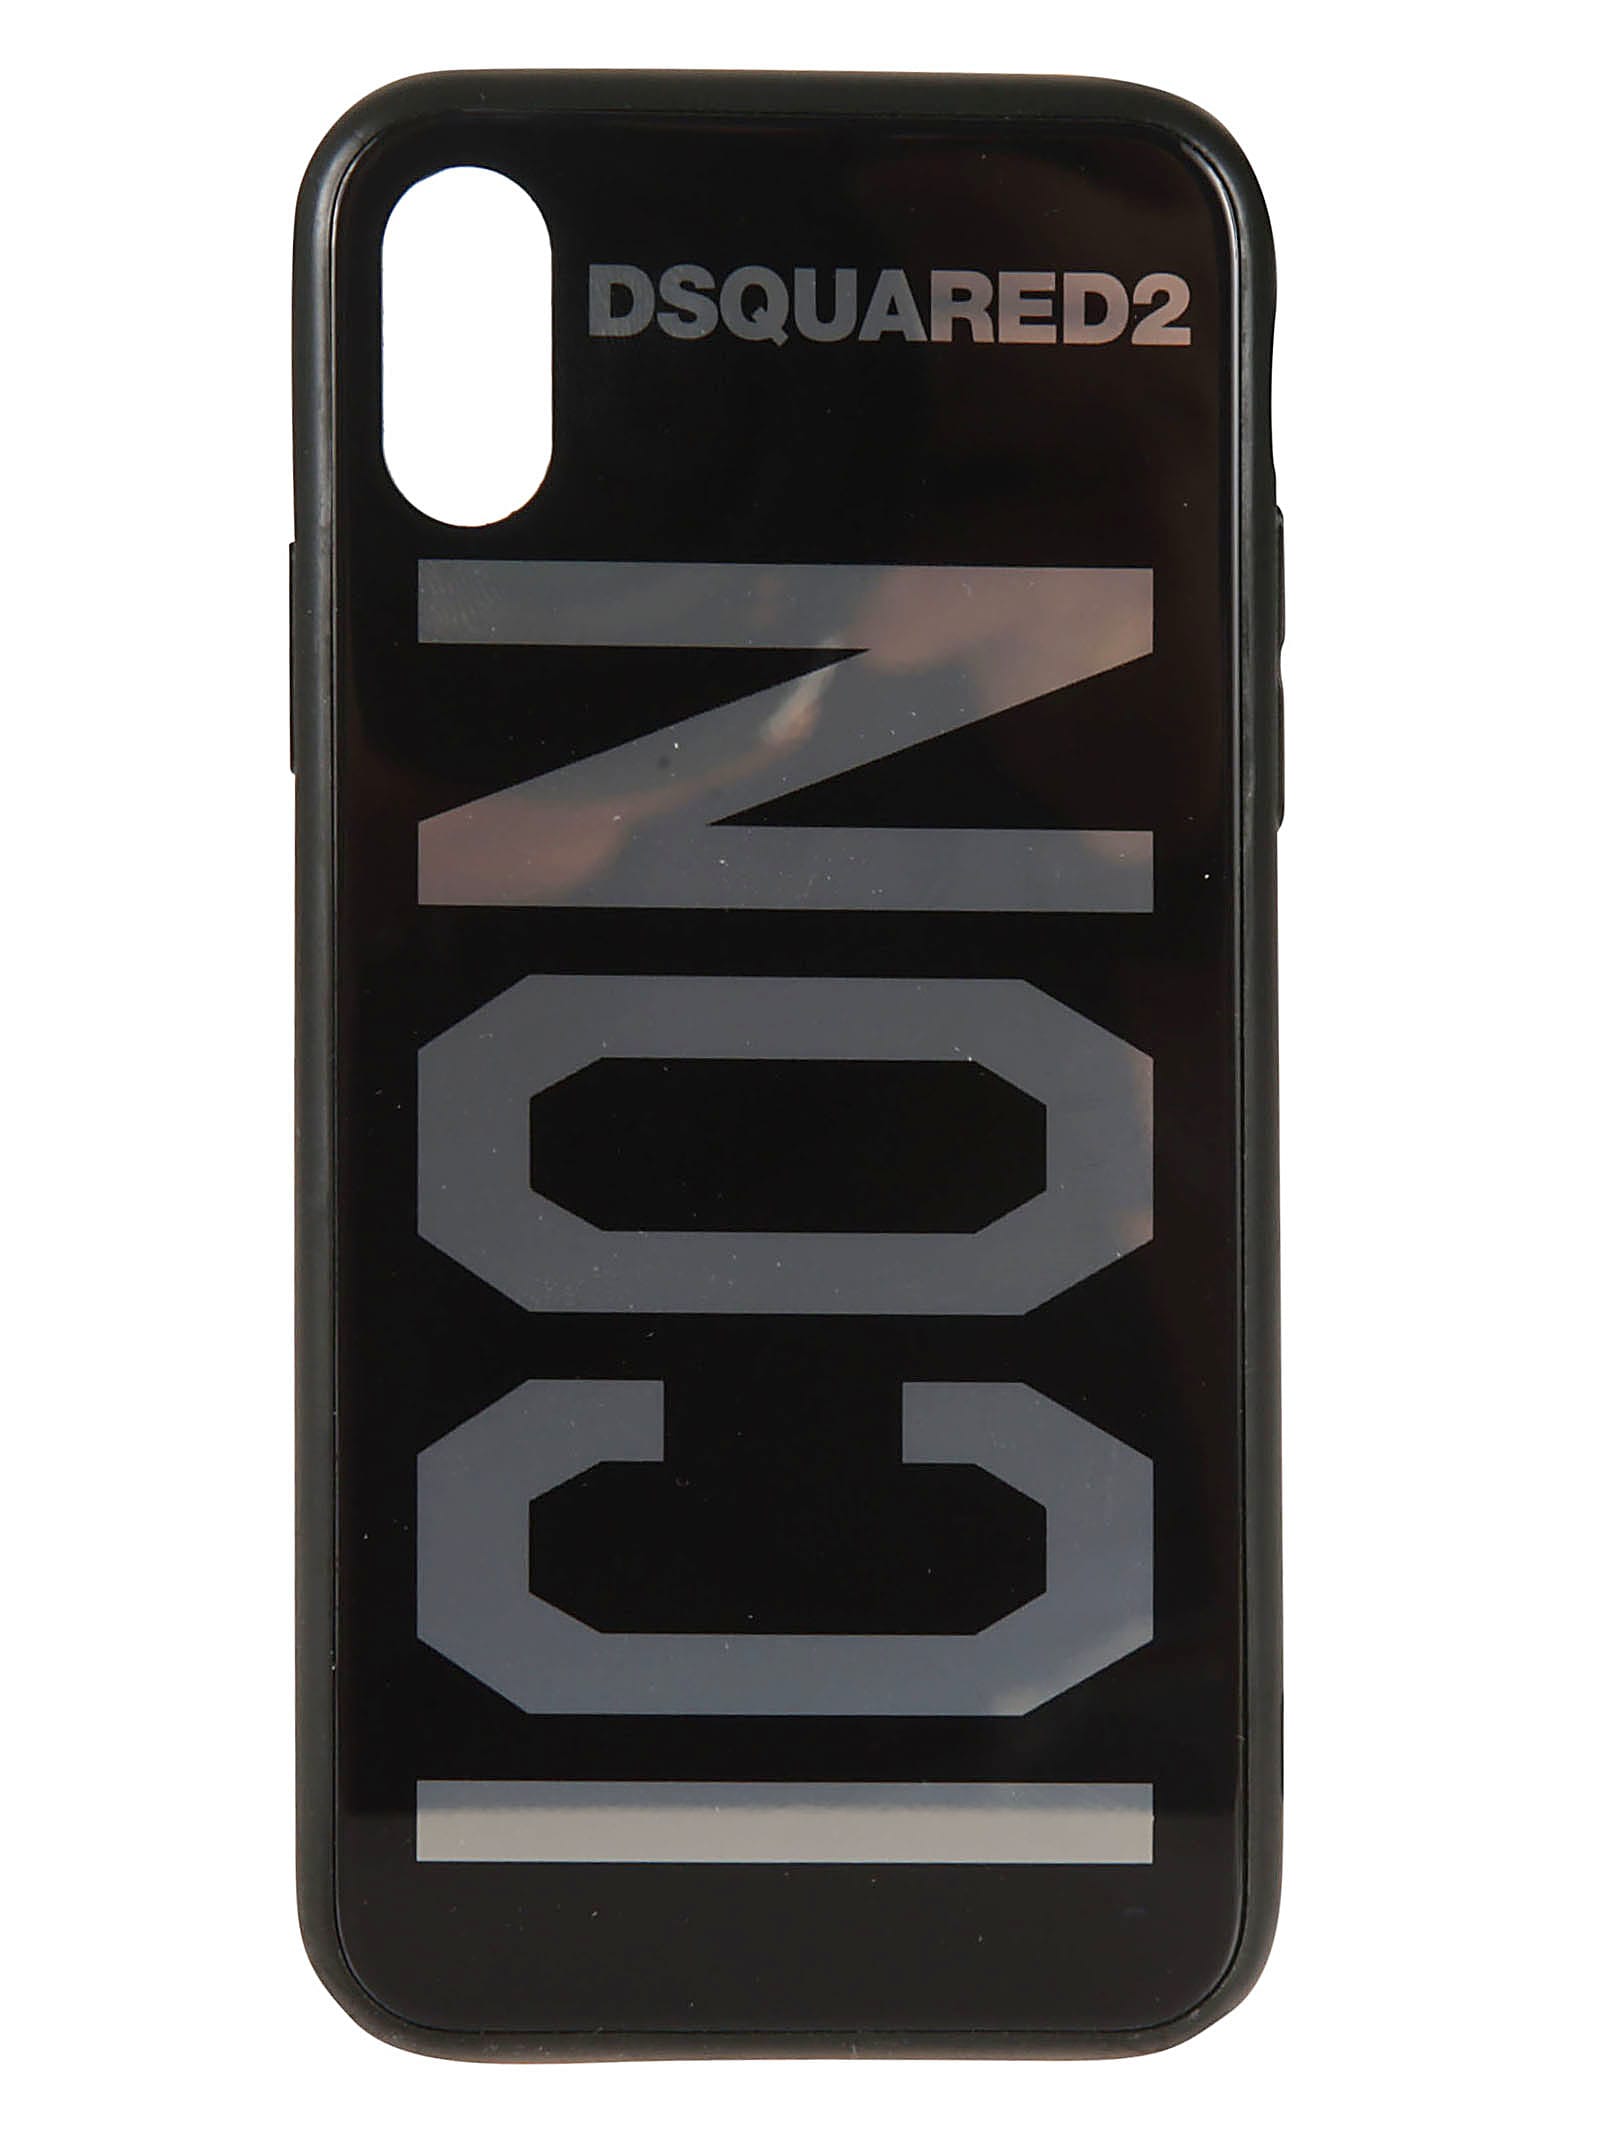 Dsquared2 Iphone X Icon Case italist